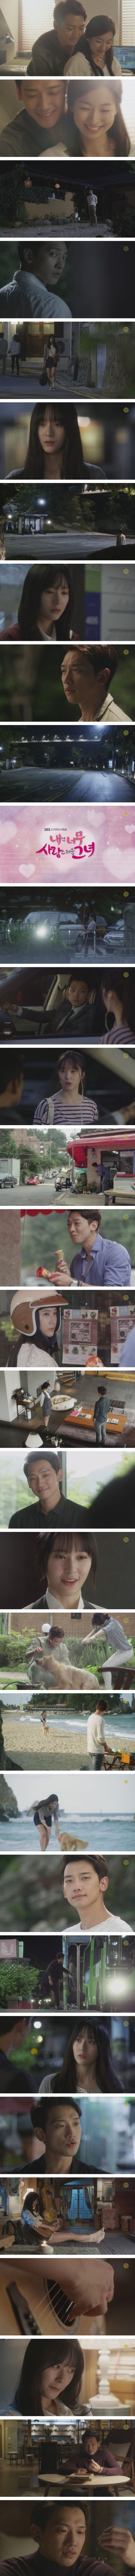 episode 1 captures for the Korean drama 'My Lovely Girl'